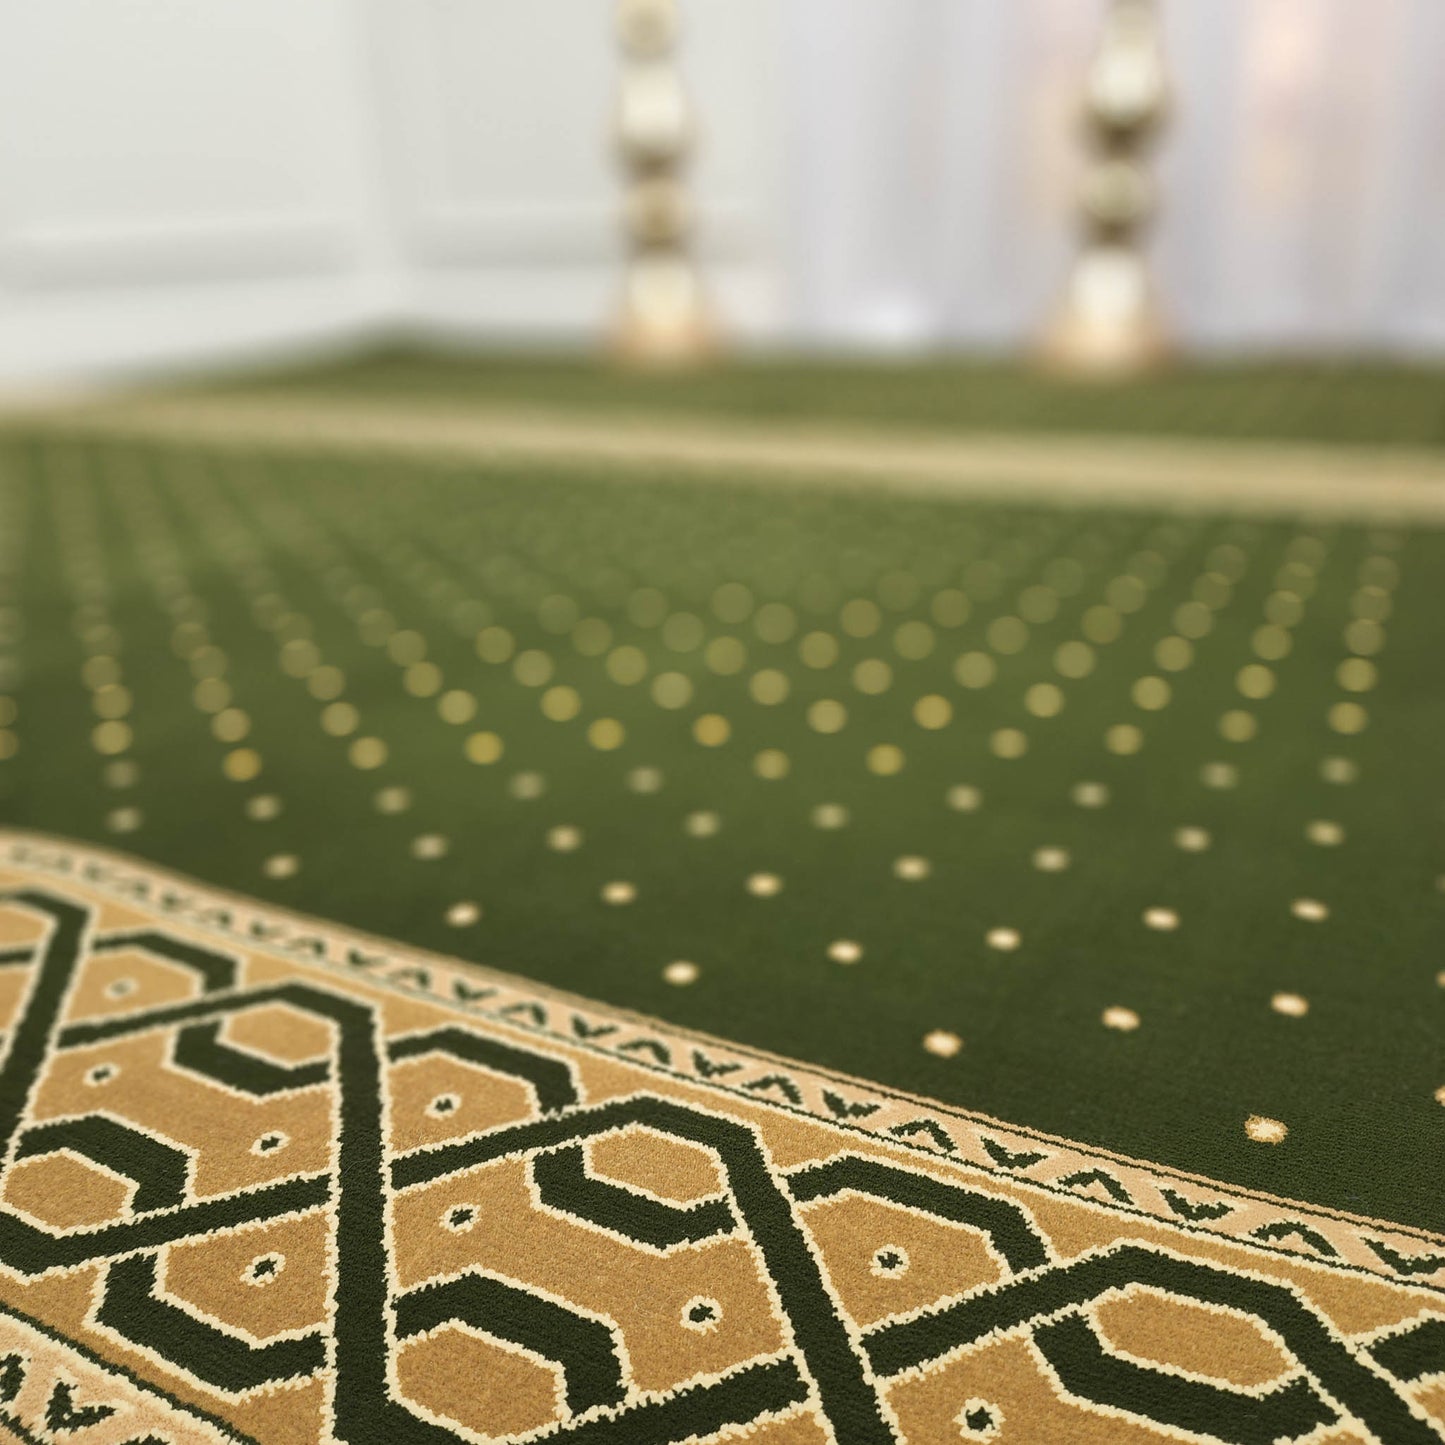 ARAFAT Green with Gold Border Mosque & Masjid Carpet